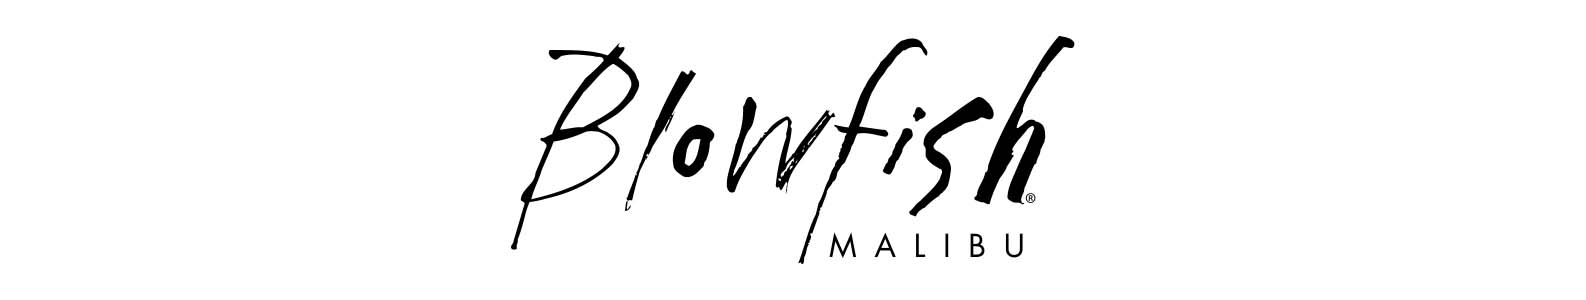 Blowfish header image